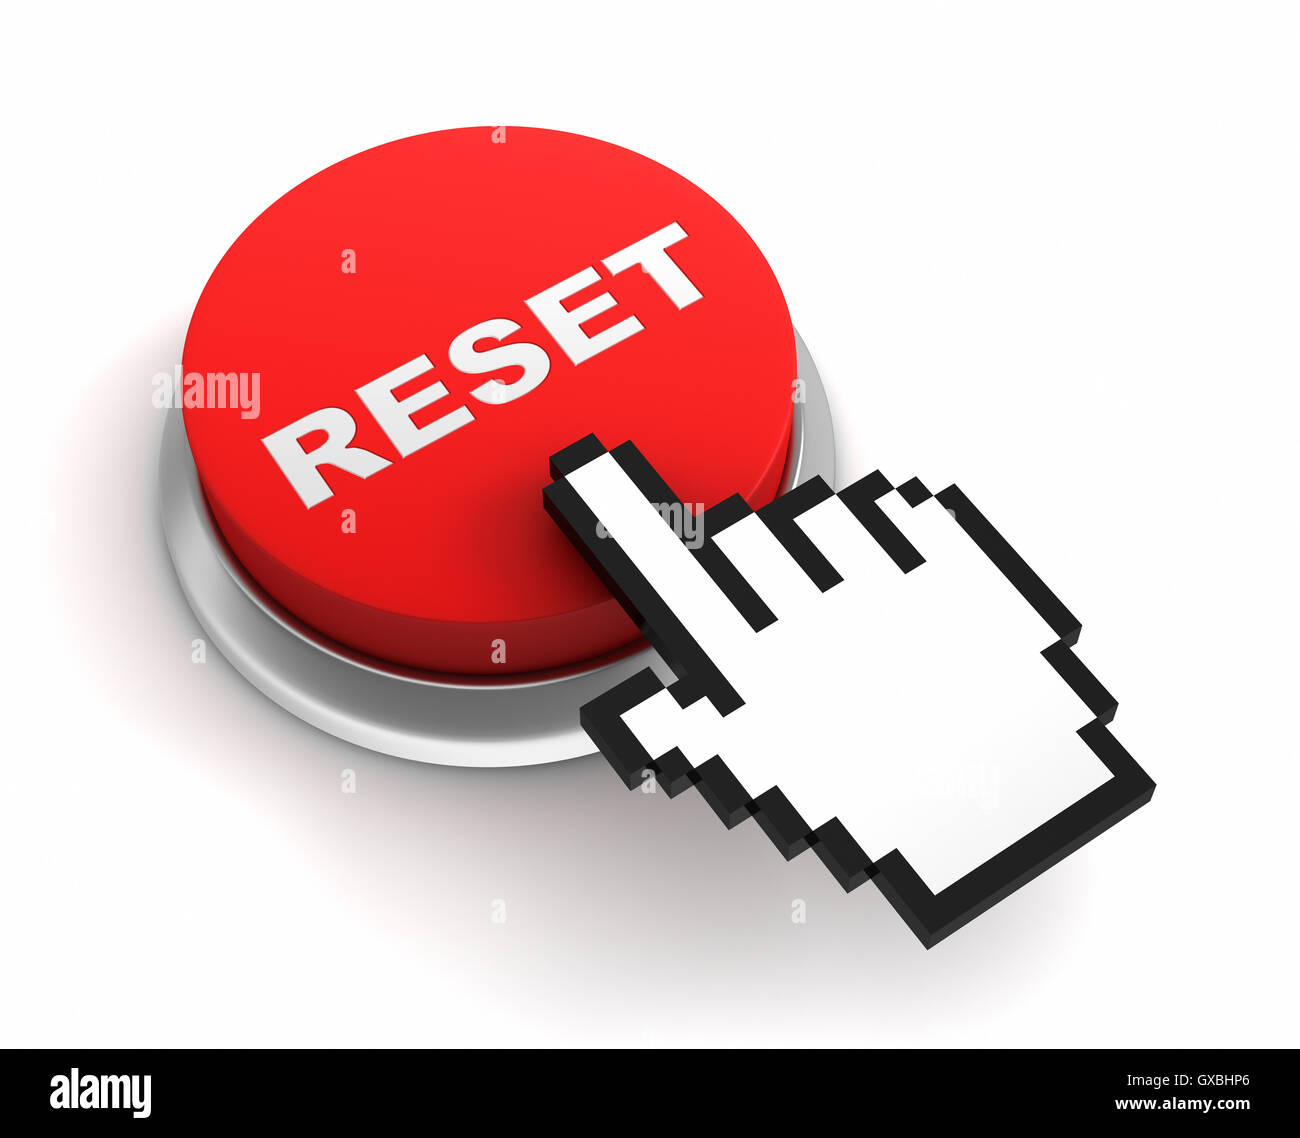 reset button concept 3d illustration Stock Photo - Alamy